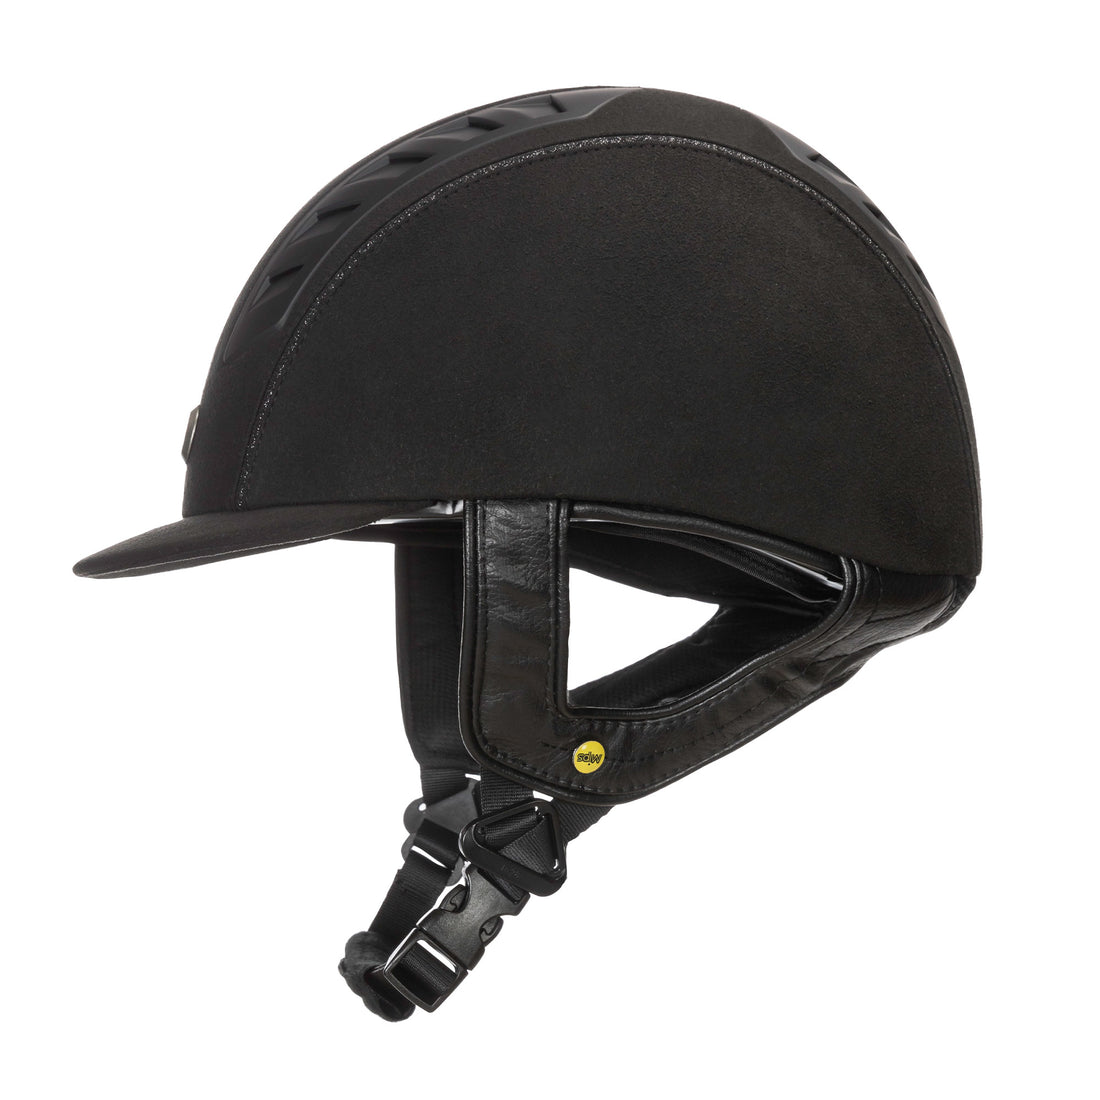 EQ3 Micromocca Riding Helmet